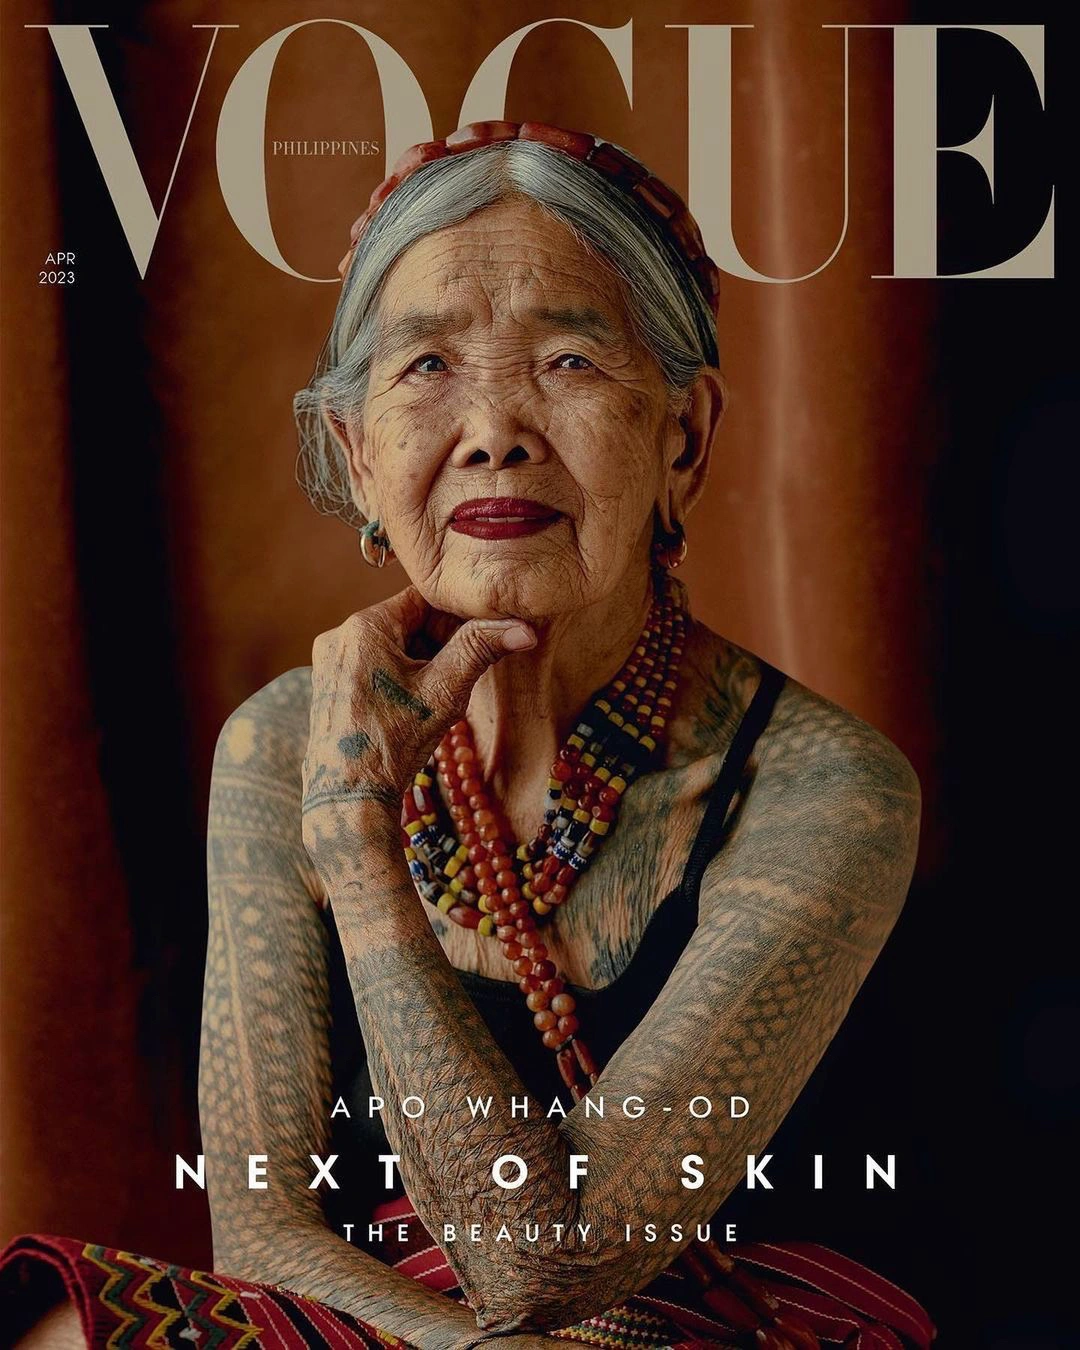 Vogue Philippines cover